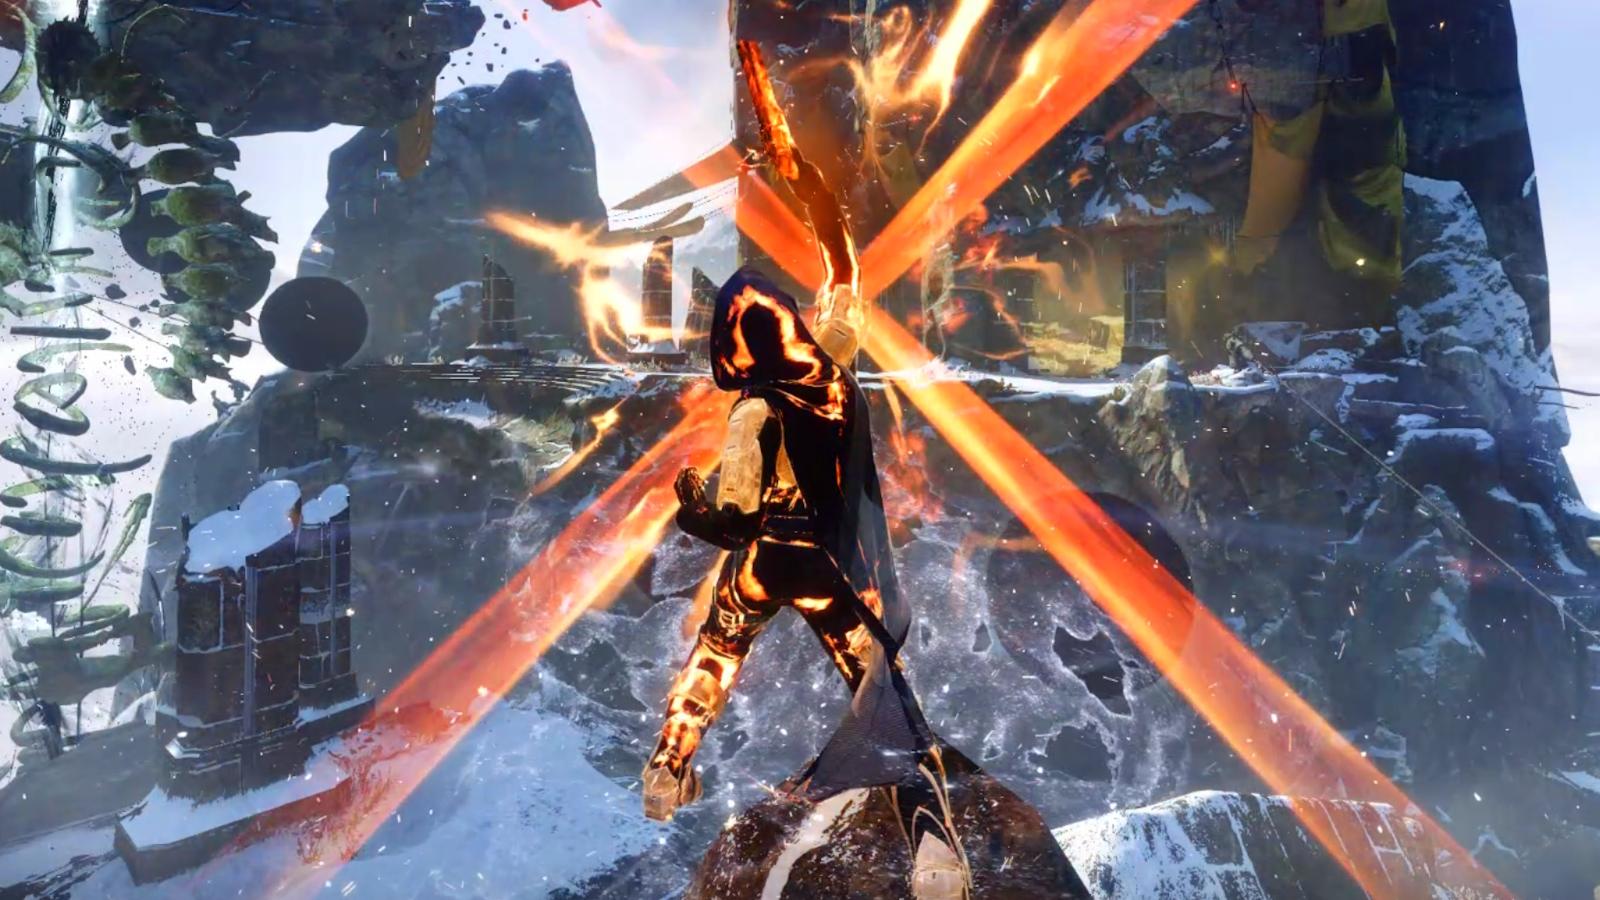 Destiny 2 Hunter using Golden Gun Super ability with Celestial Nighthawk exotic.